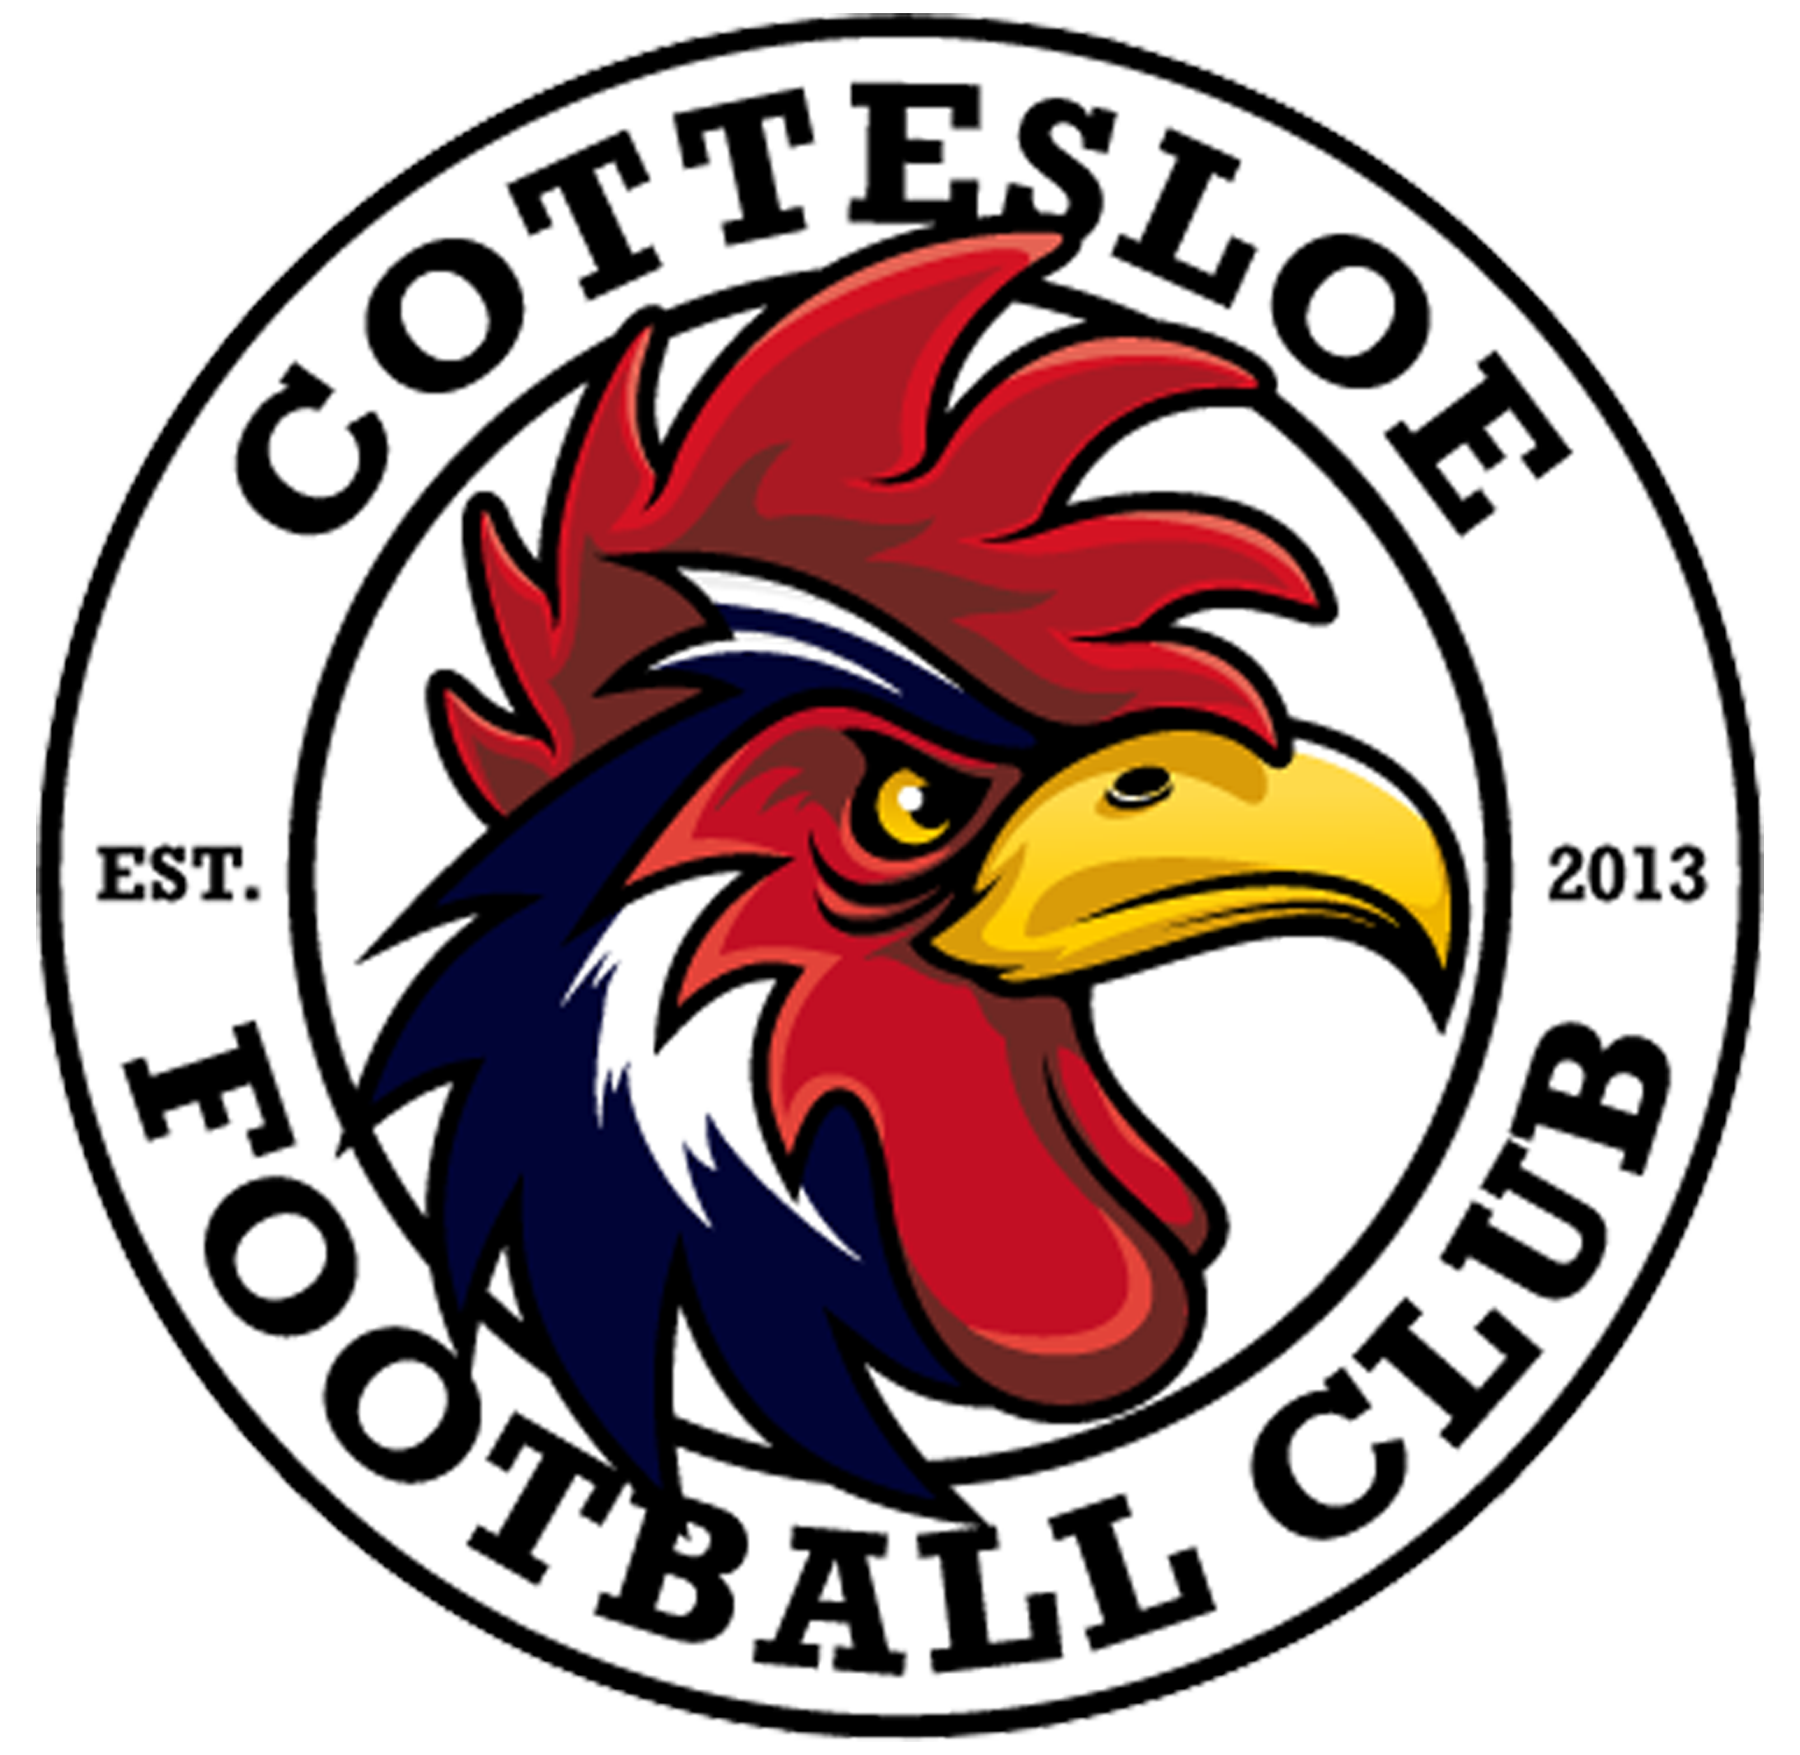 Cottesloe Football Club